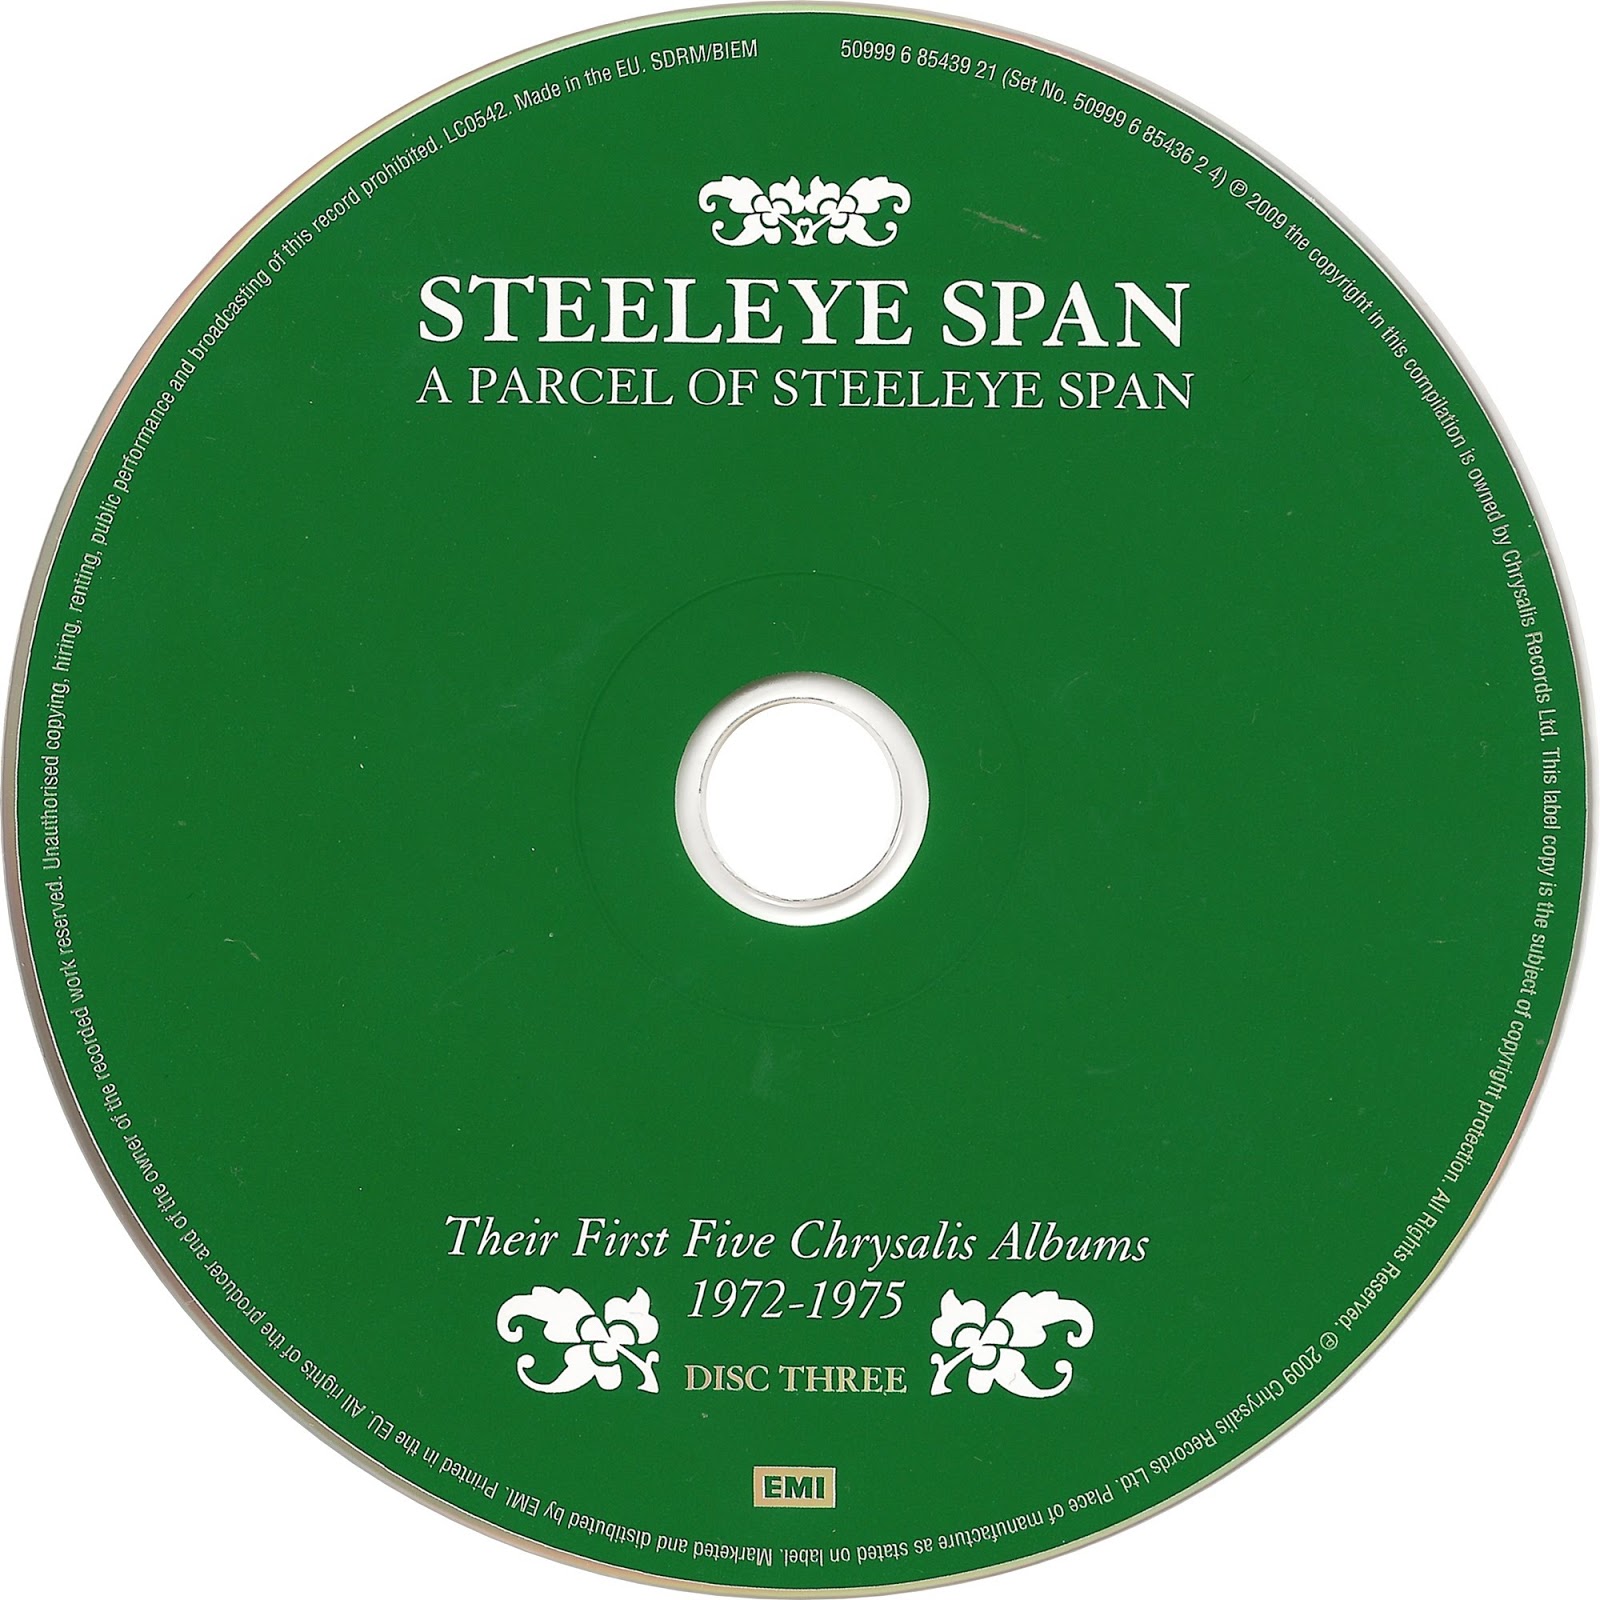 Альбомы 1972 года. Stackridge Extravaganza 1974. Stackridge Stackridge 1971. Steeleye span "below the Salt". Steeleye span – gone to Australia - on Tour 1975-84.